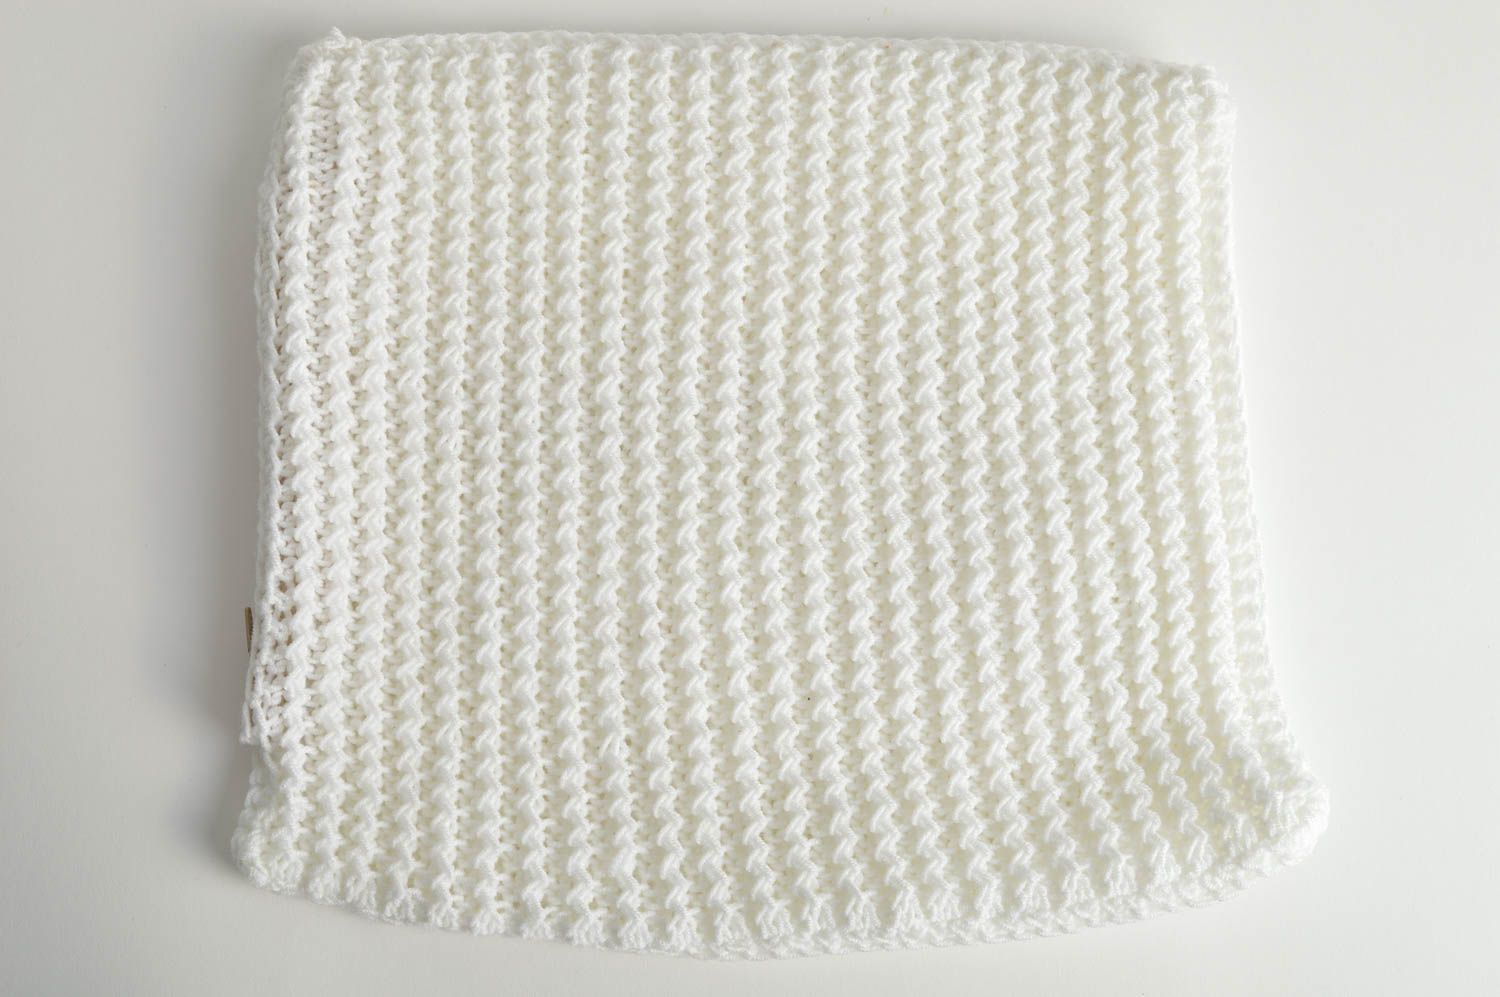 Small stylish beautiful handmade white knitted pillowcase designer accessory photo 2